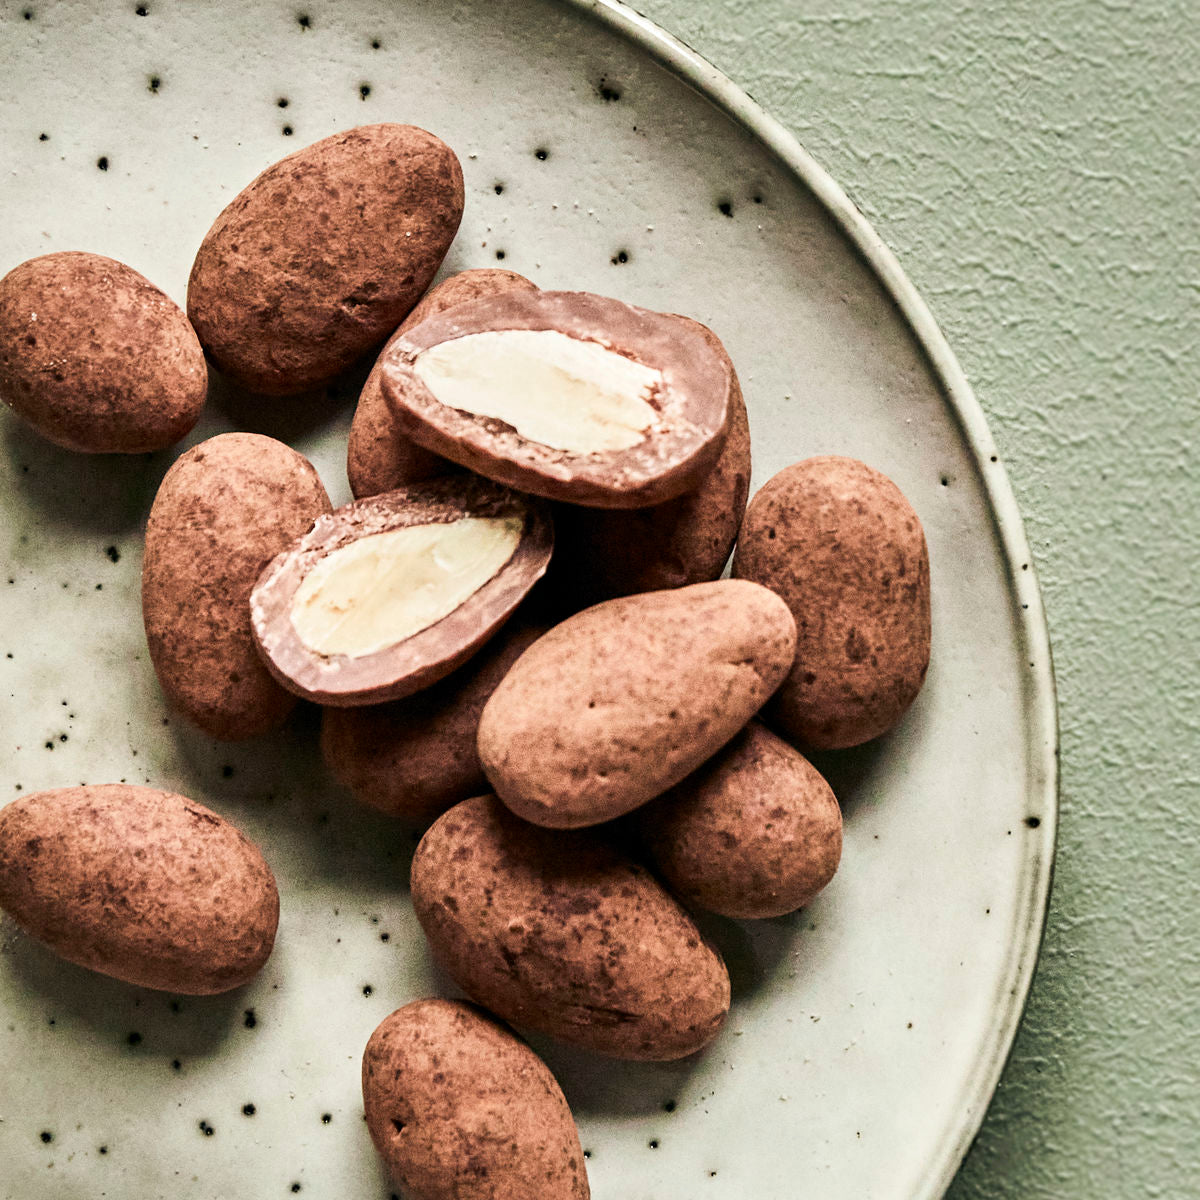 Chocolate Covered Almonds, Cocoa